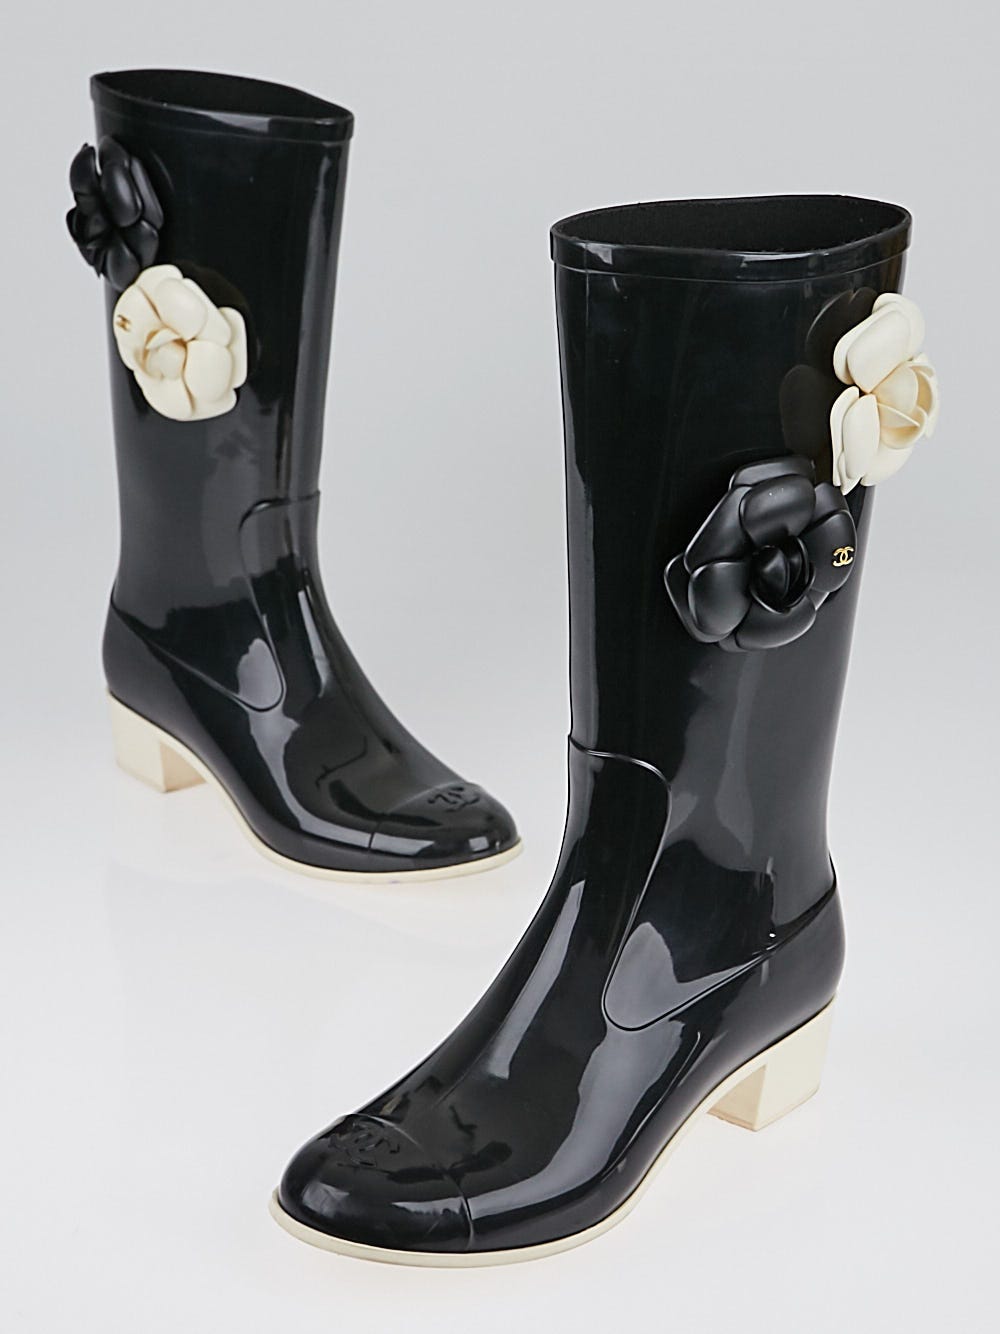 Chanel Black Rubber Camellia Flower Rain Boots Size 6.5/37